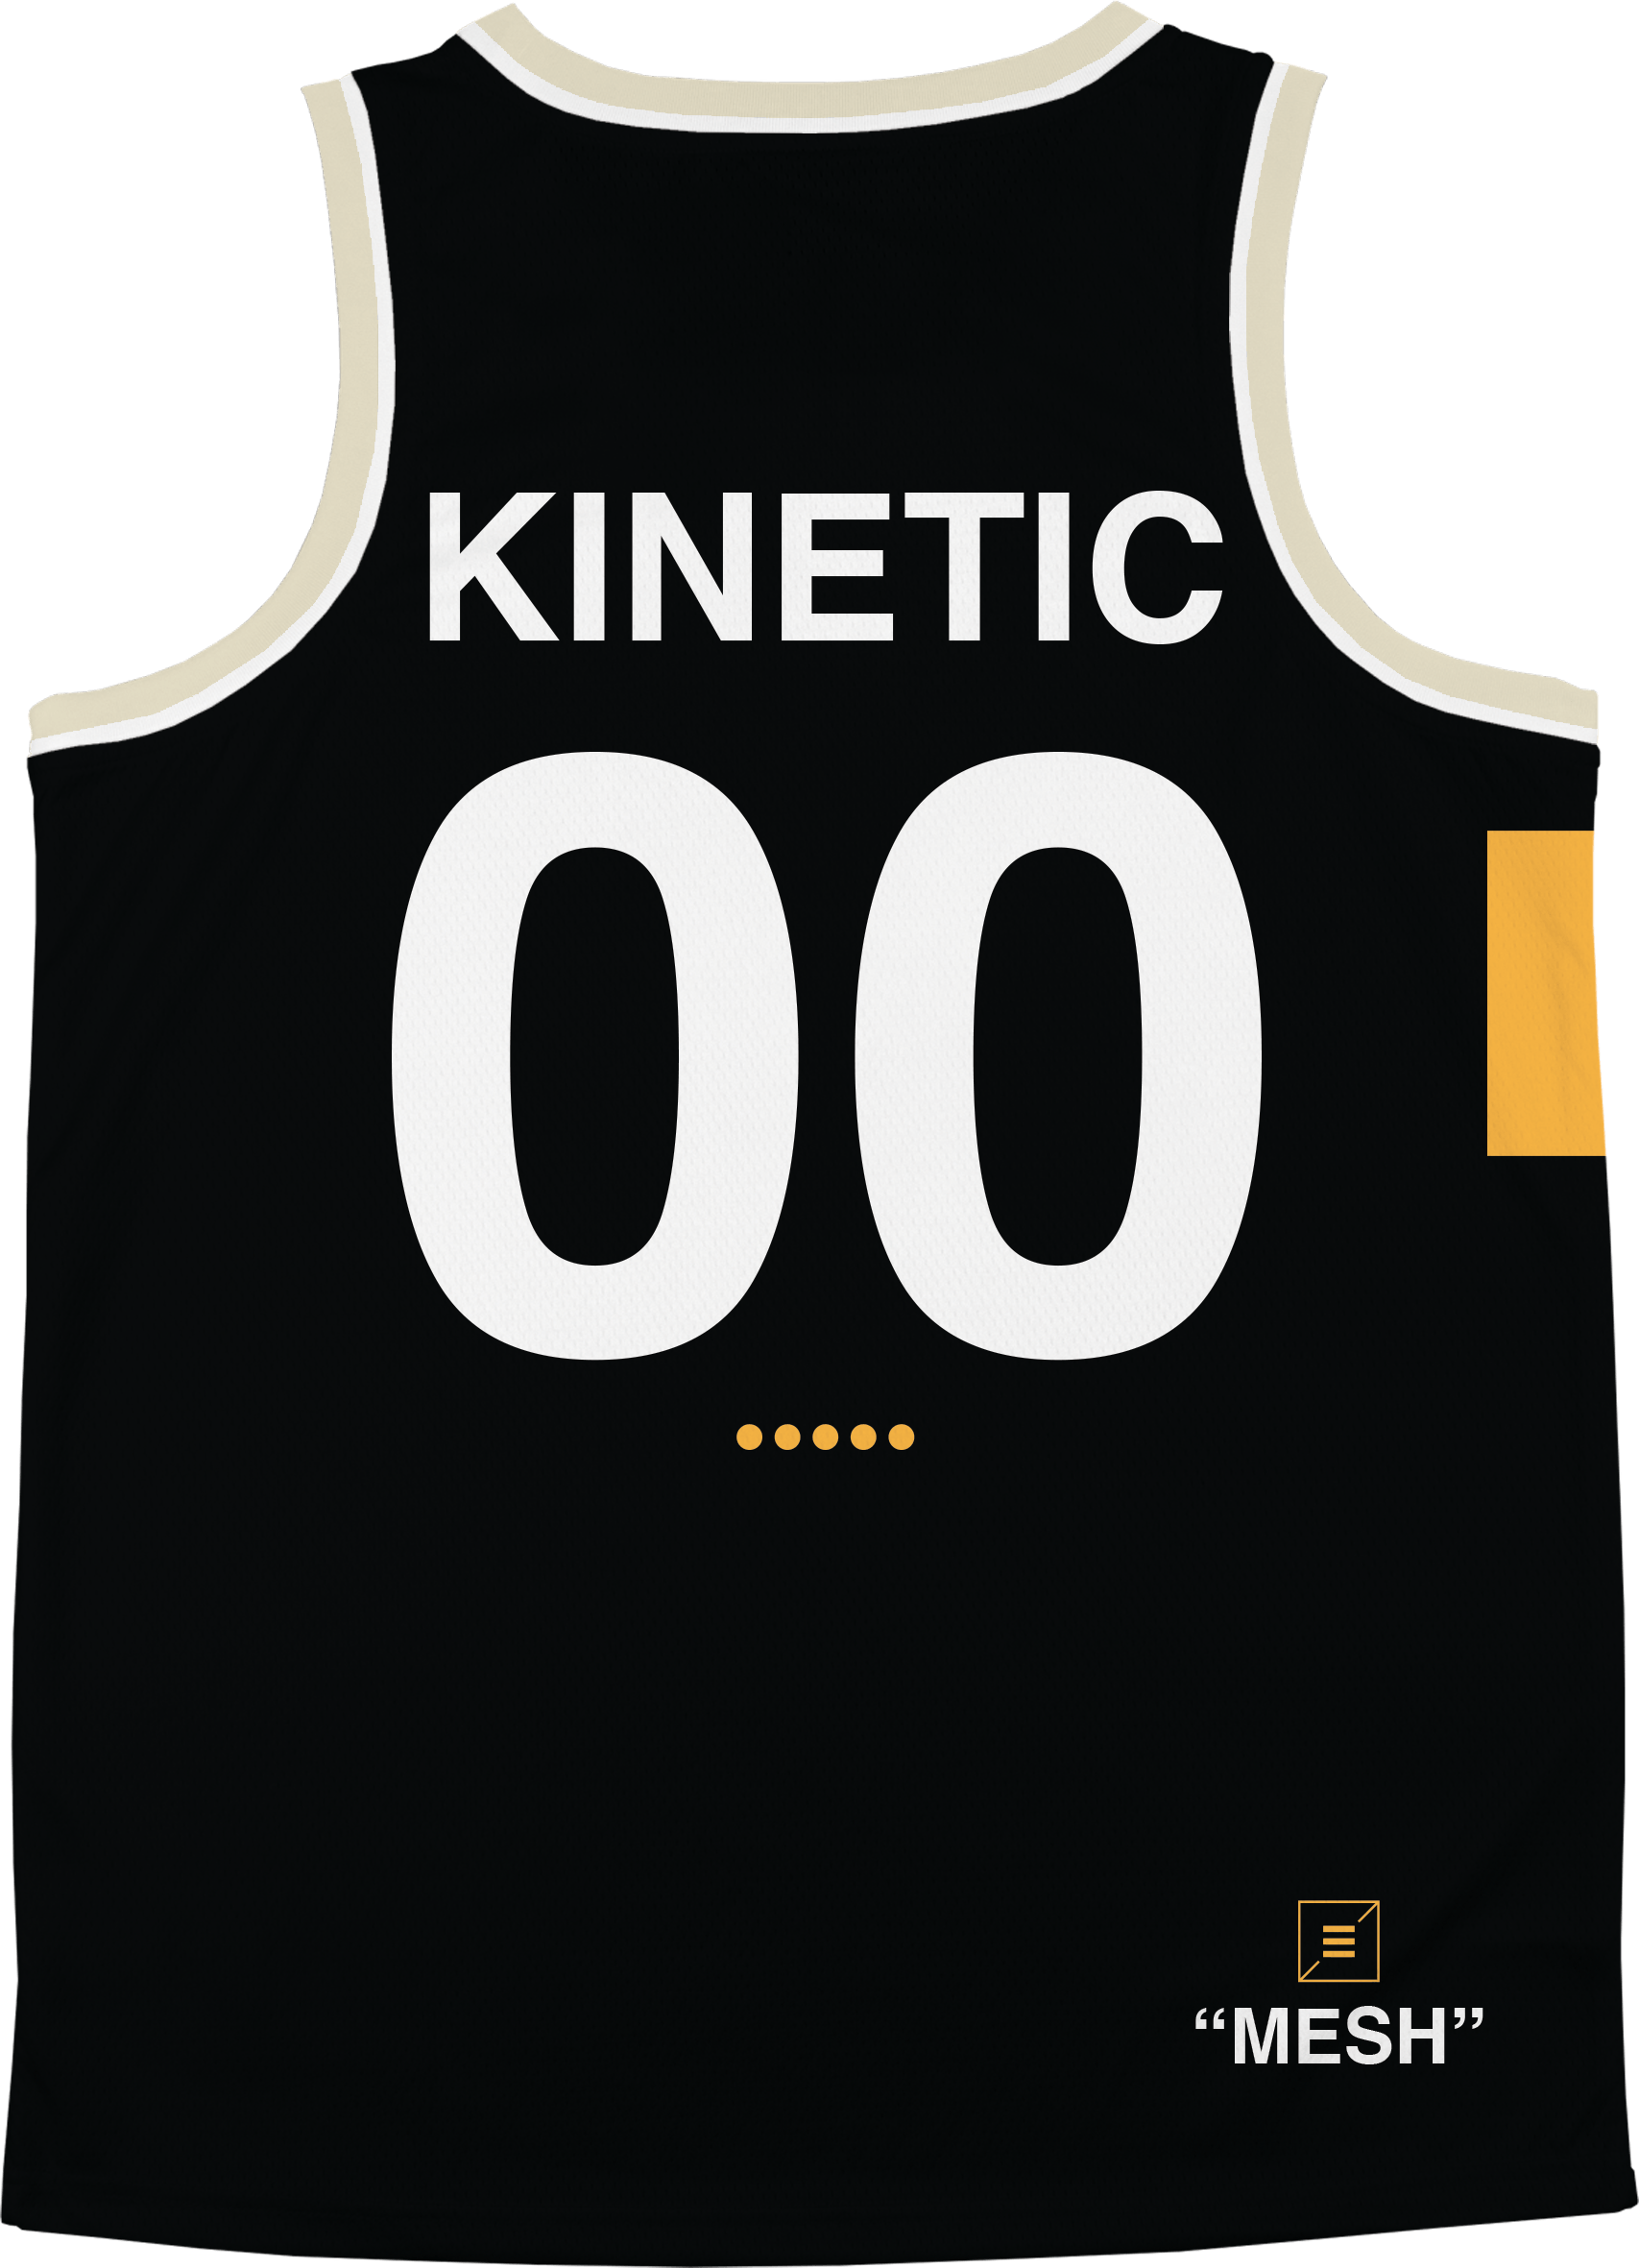 Beta Theta Pi - OFF-MESH Basketball Jersey - Kinetic Society